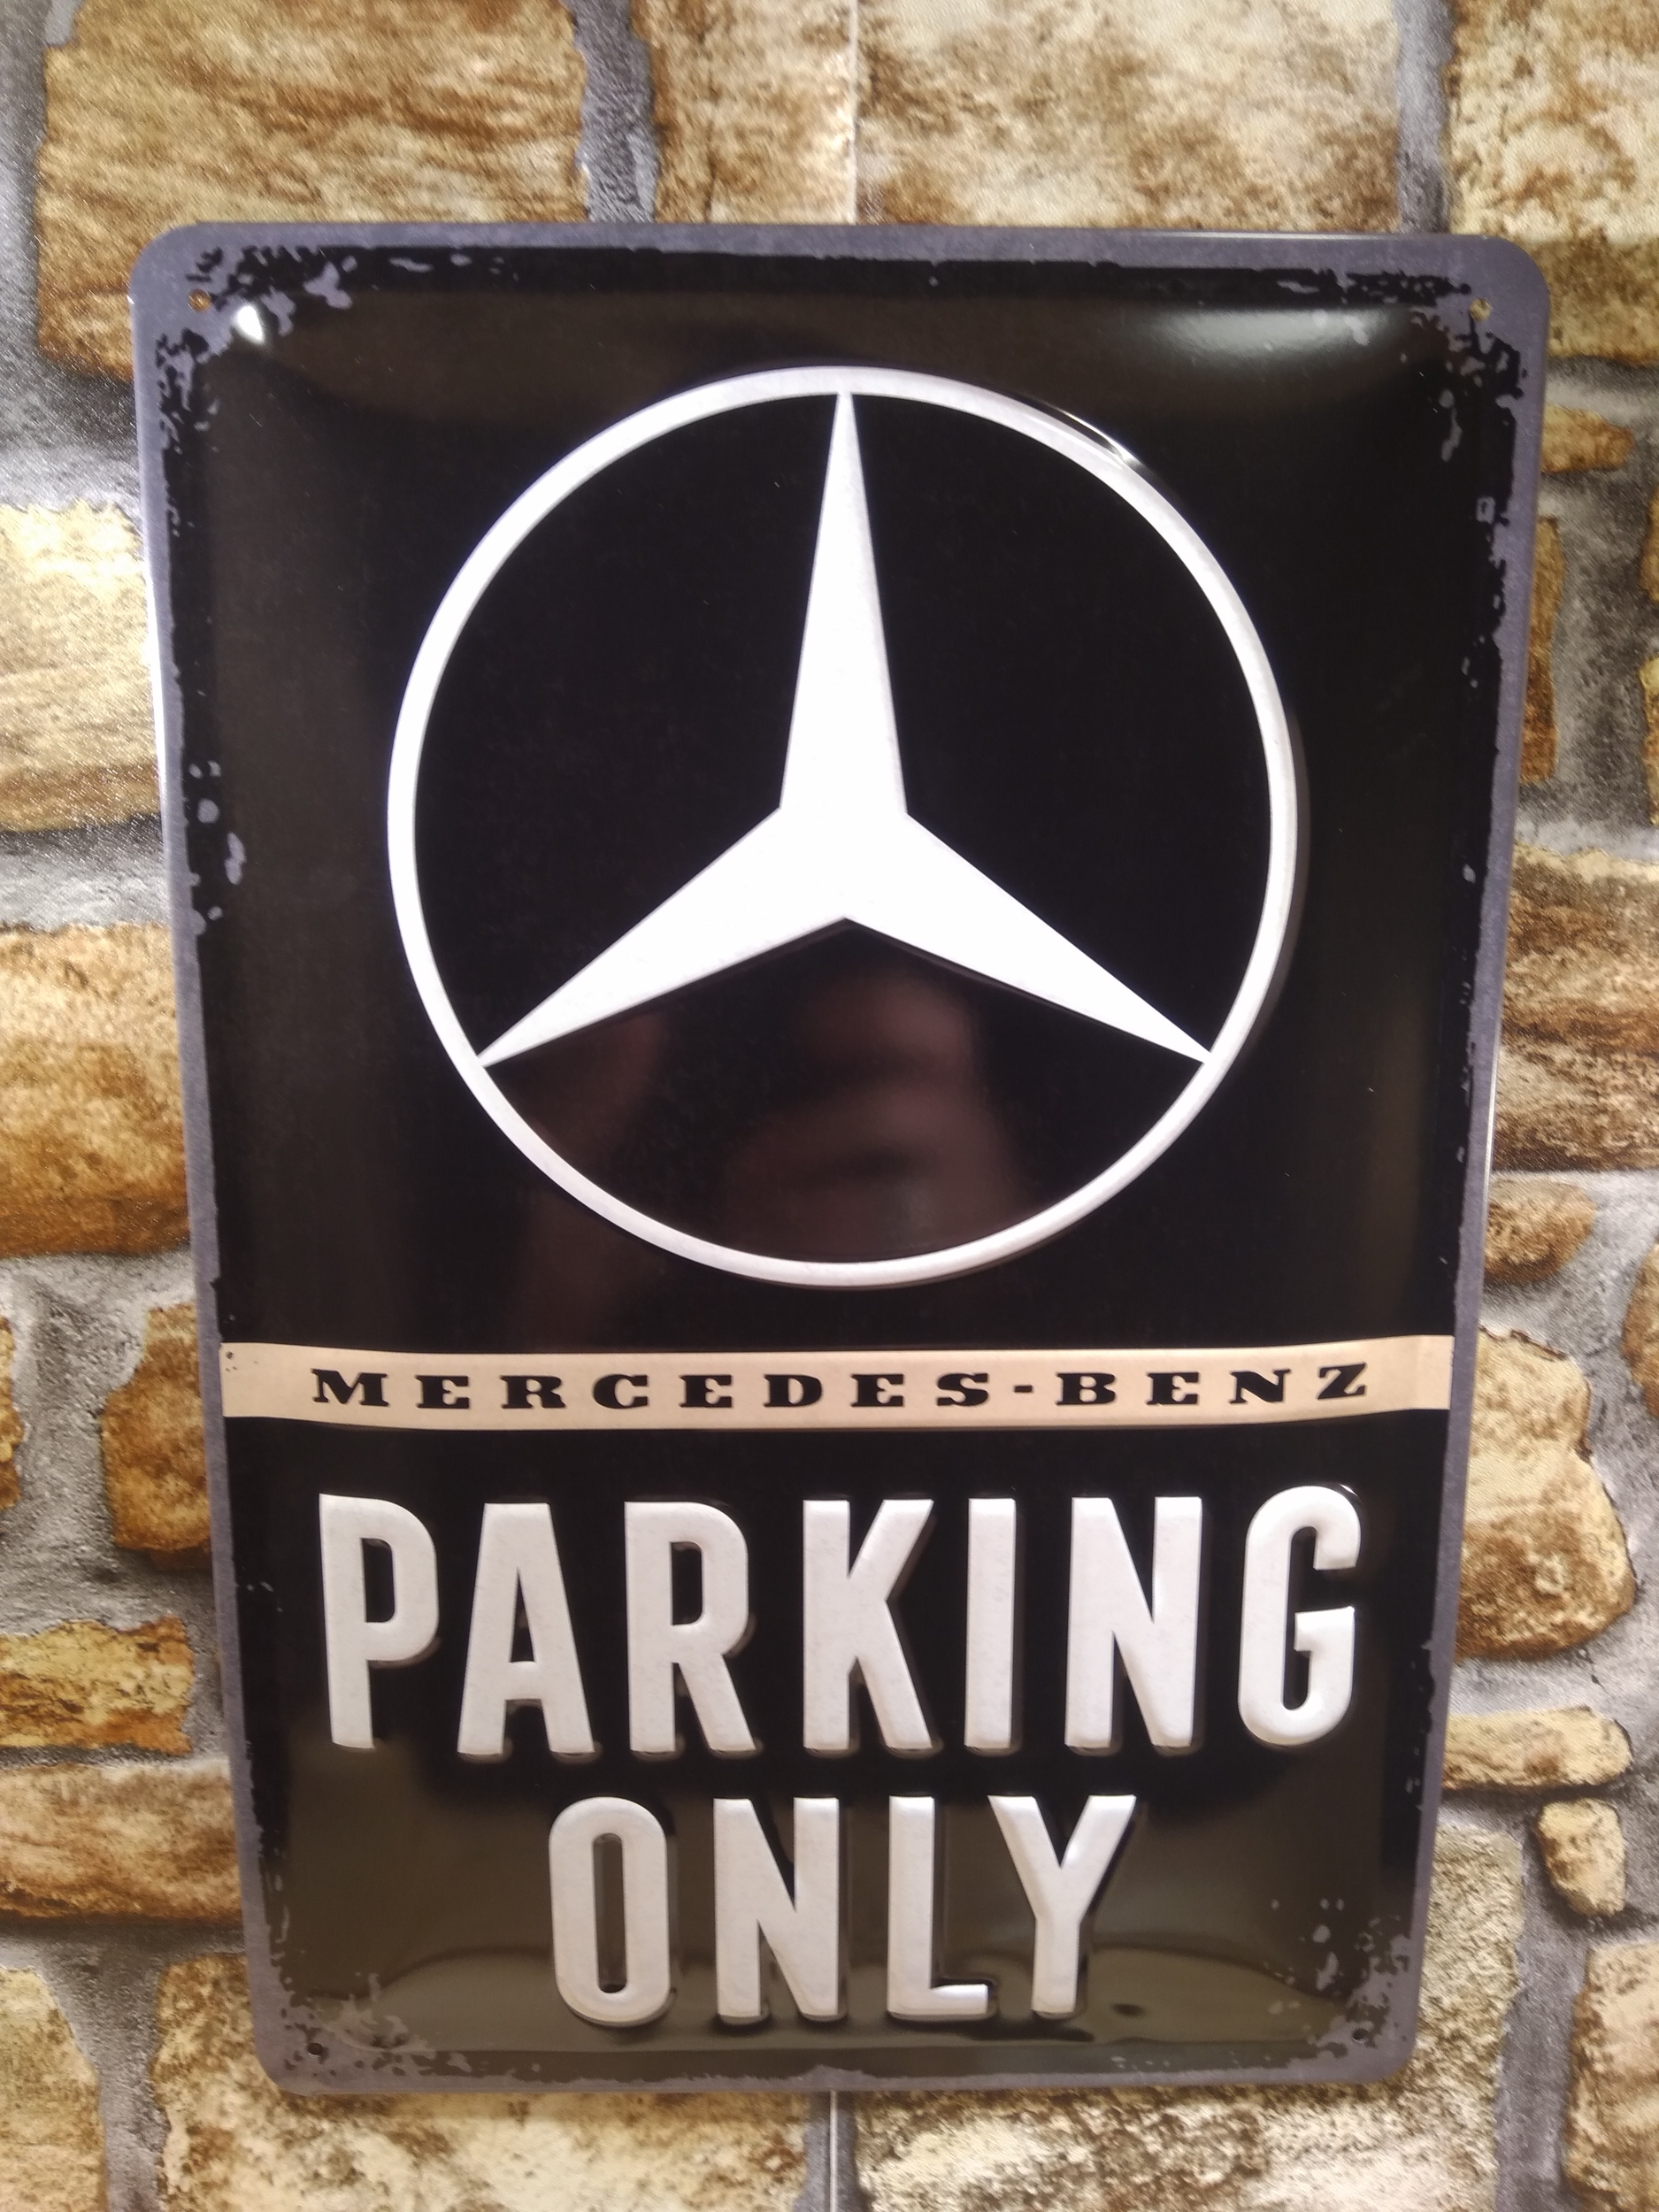 plaque parking only mercedes